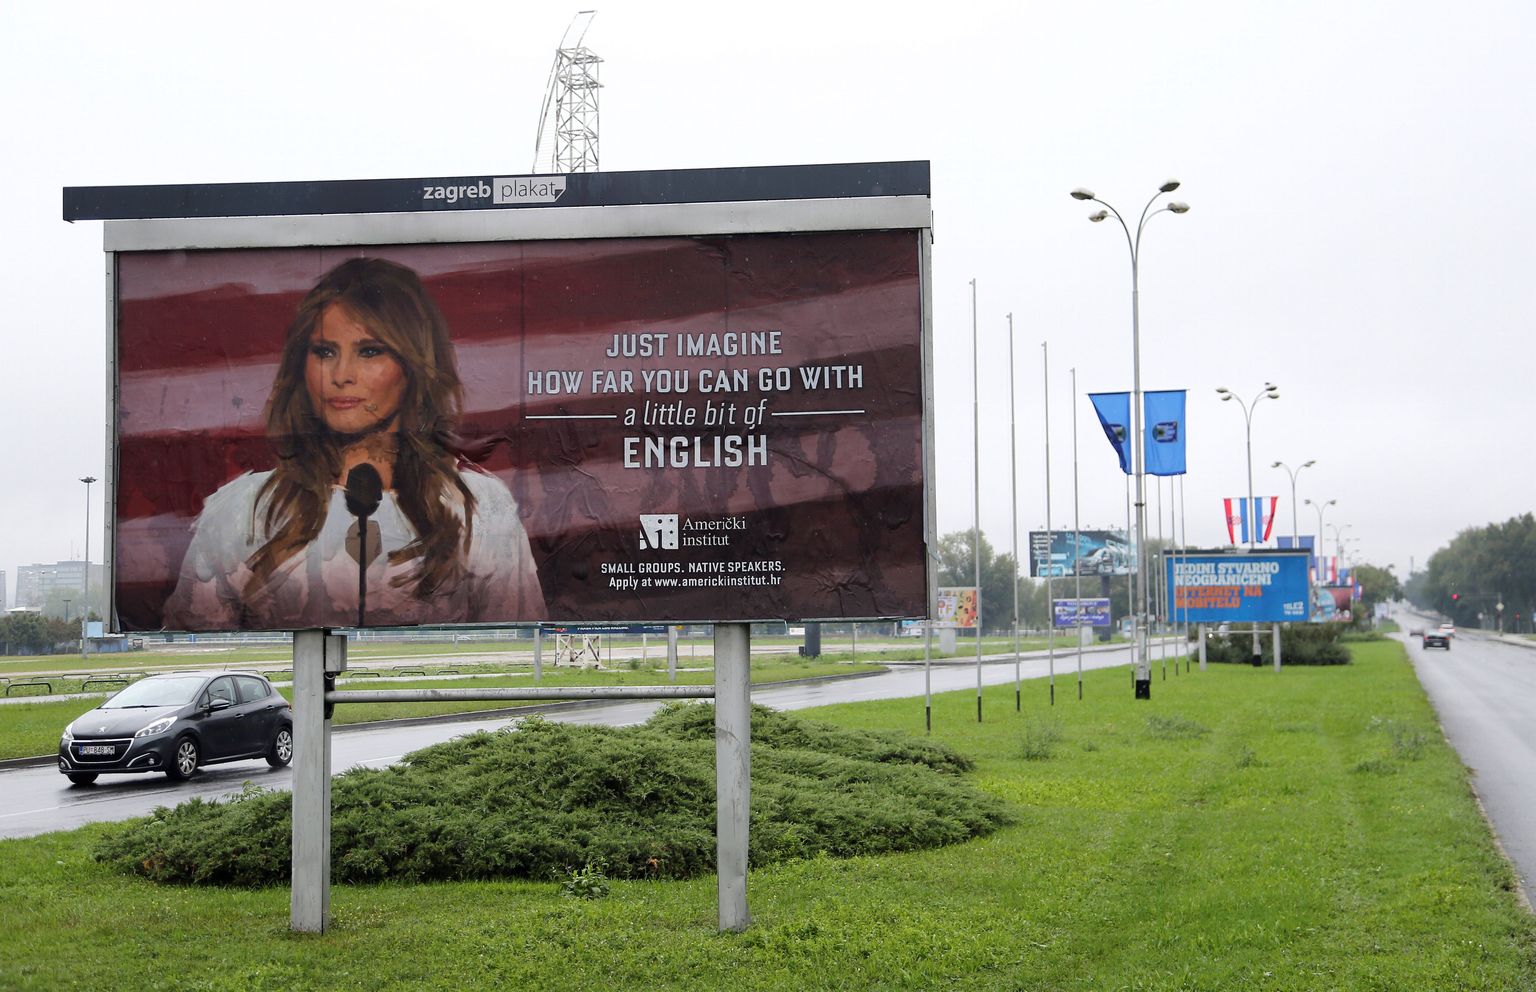 Melania Trumpiga reklaam Horvaatias Zagrebis